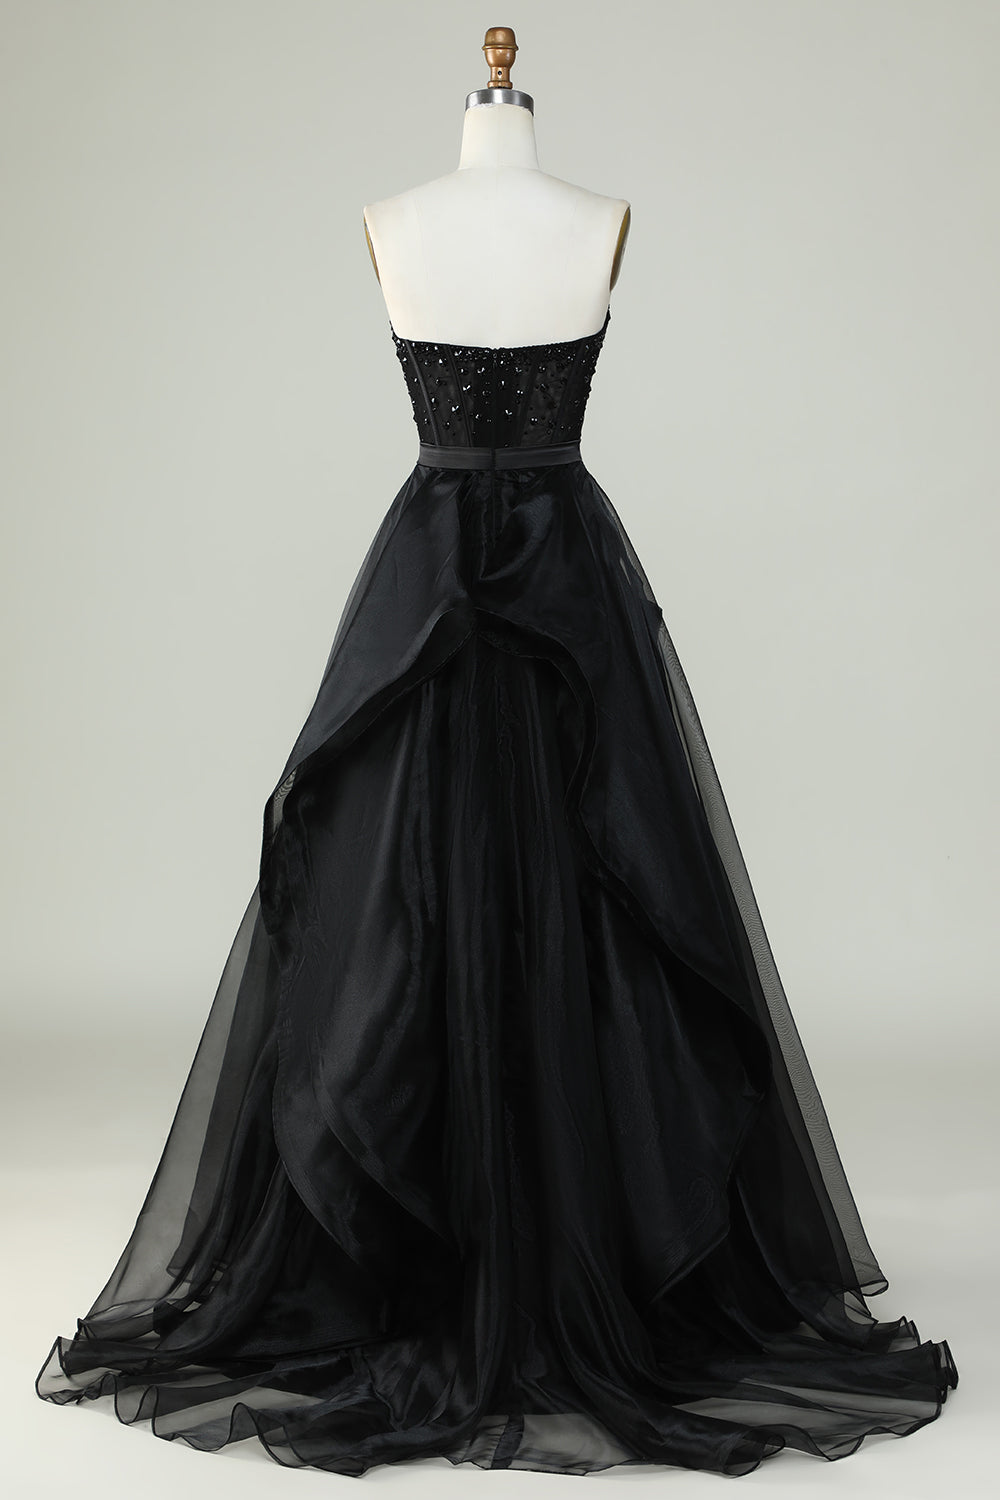 Black Princess A Line Sweetheart Strapless Formal Evening Dress